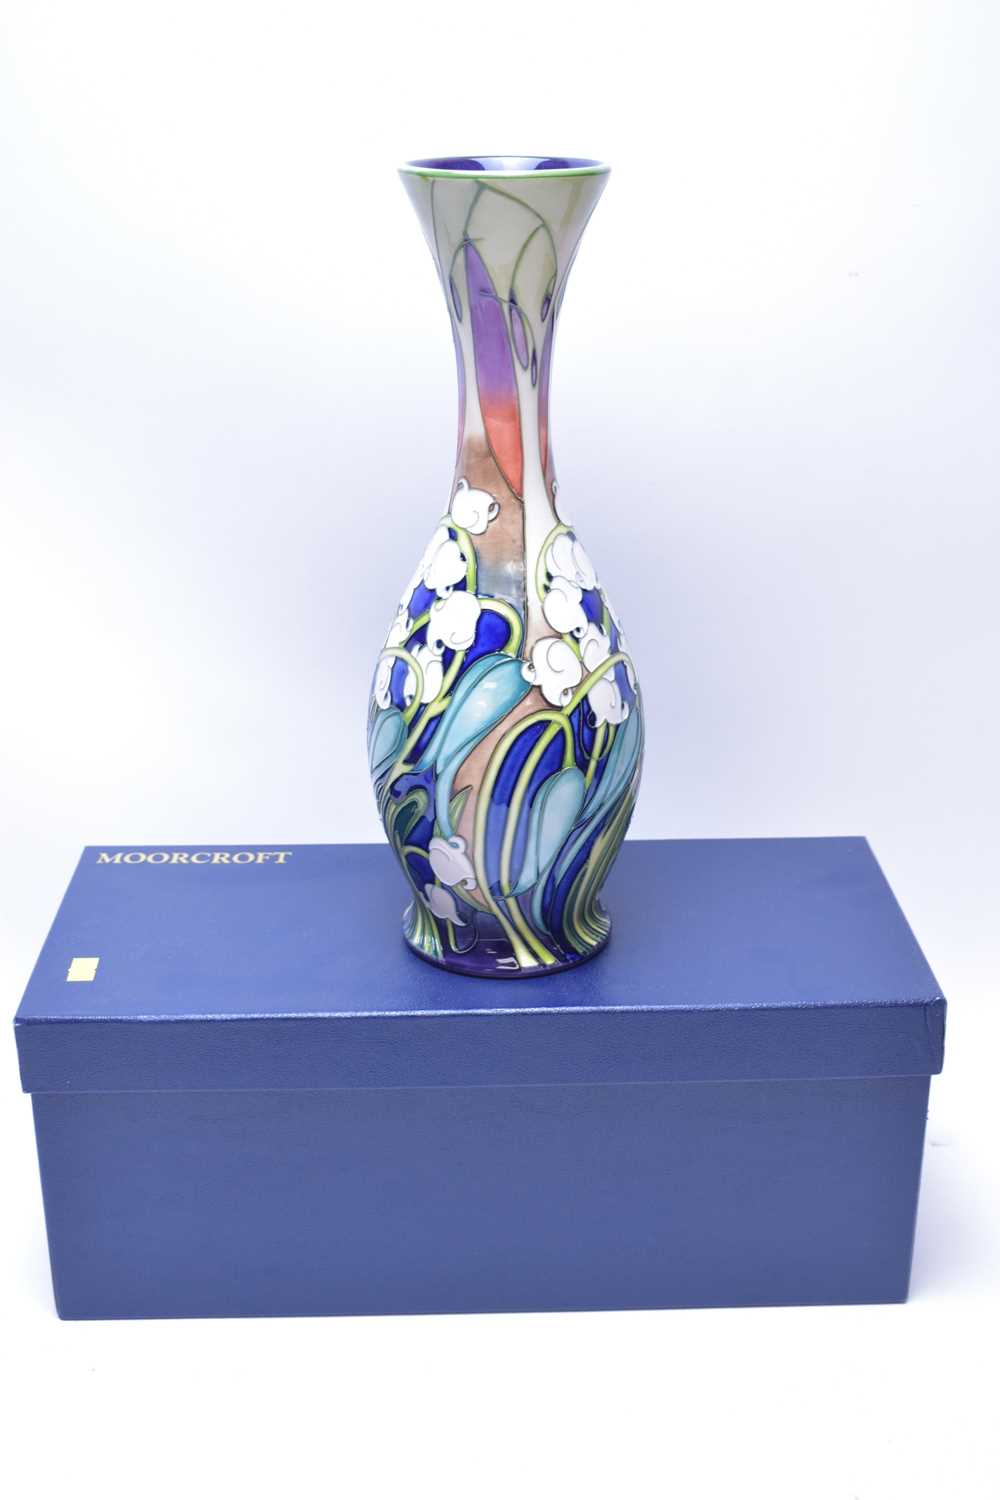 Lot 206 - Moorcroft limited edition vase.